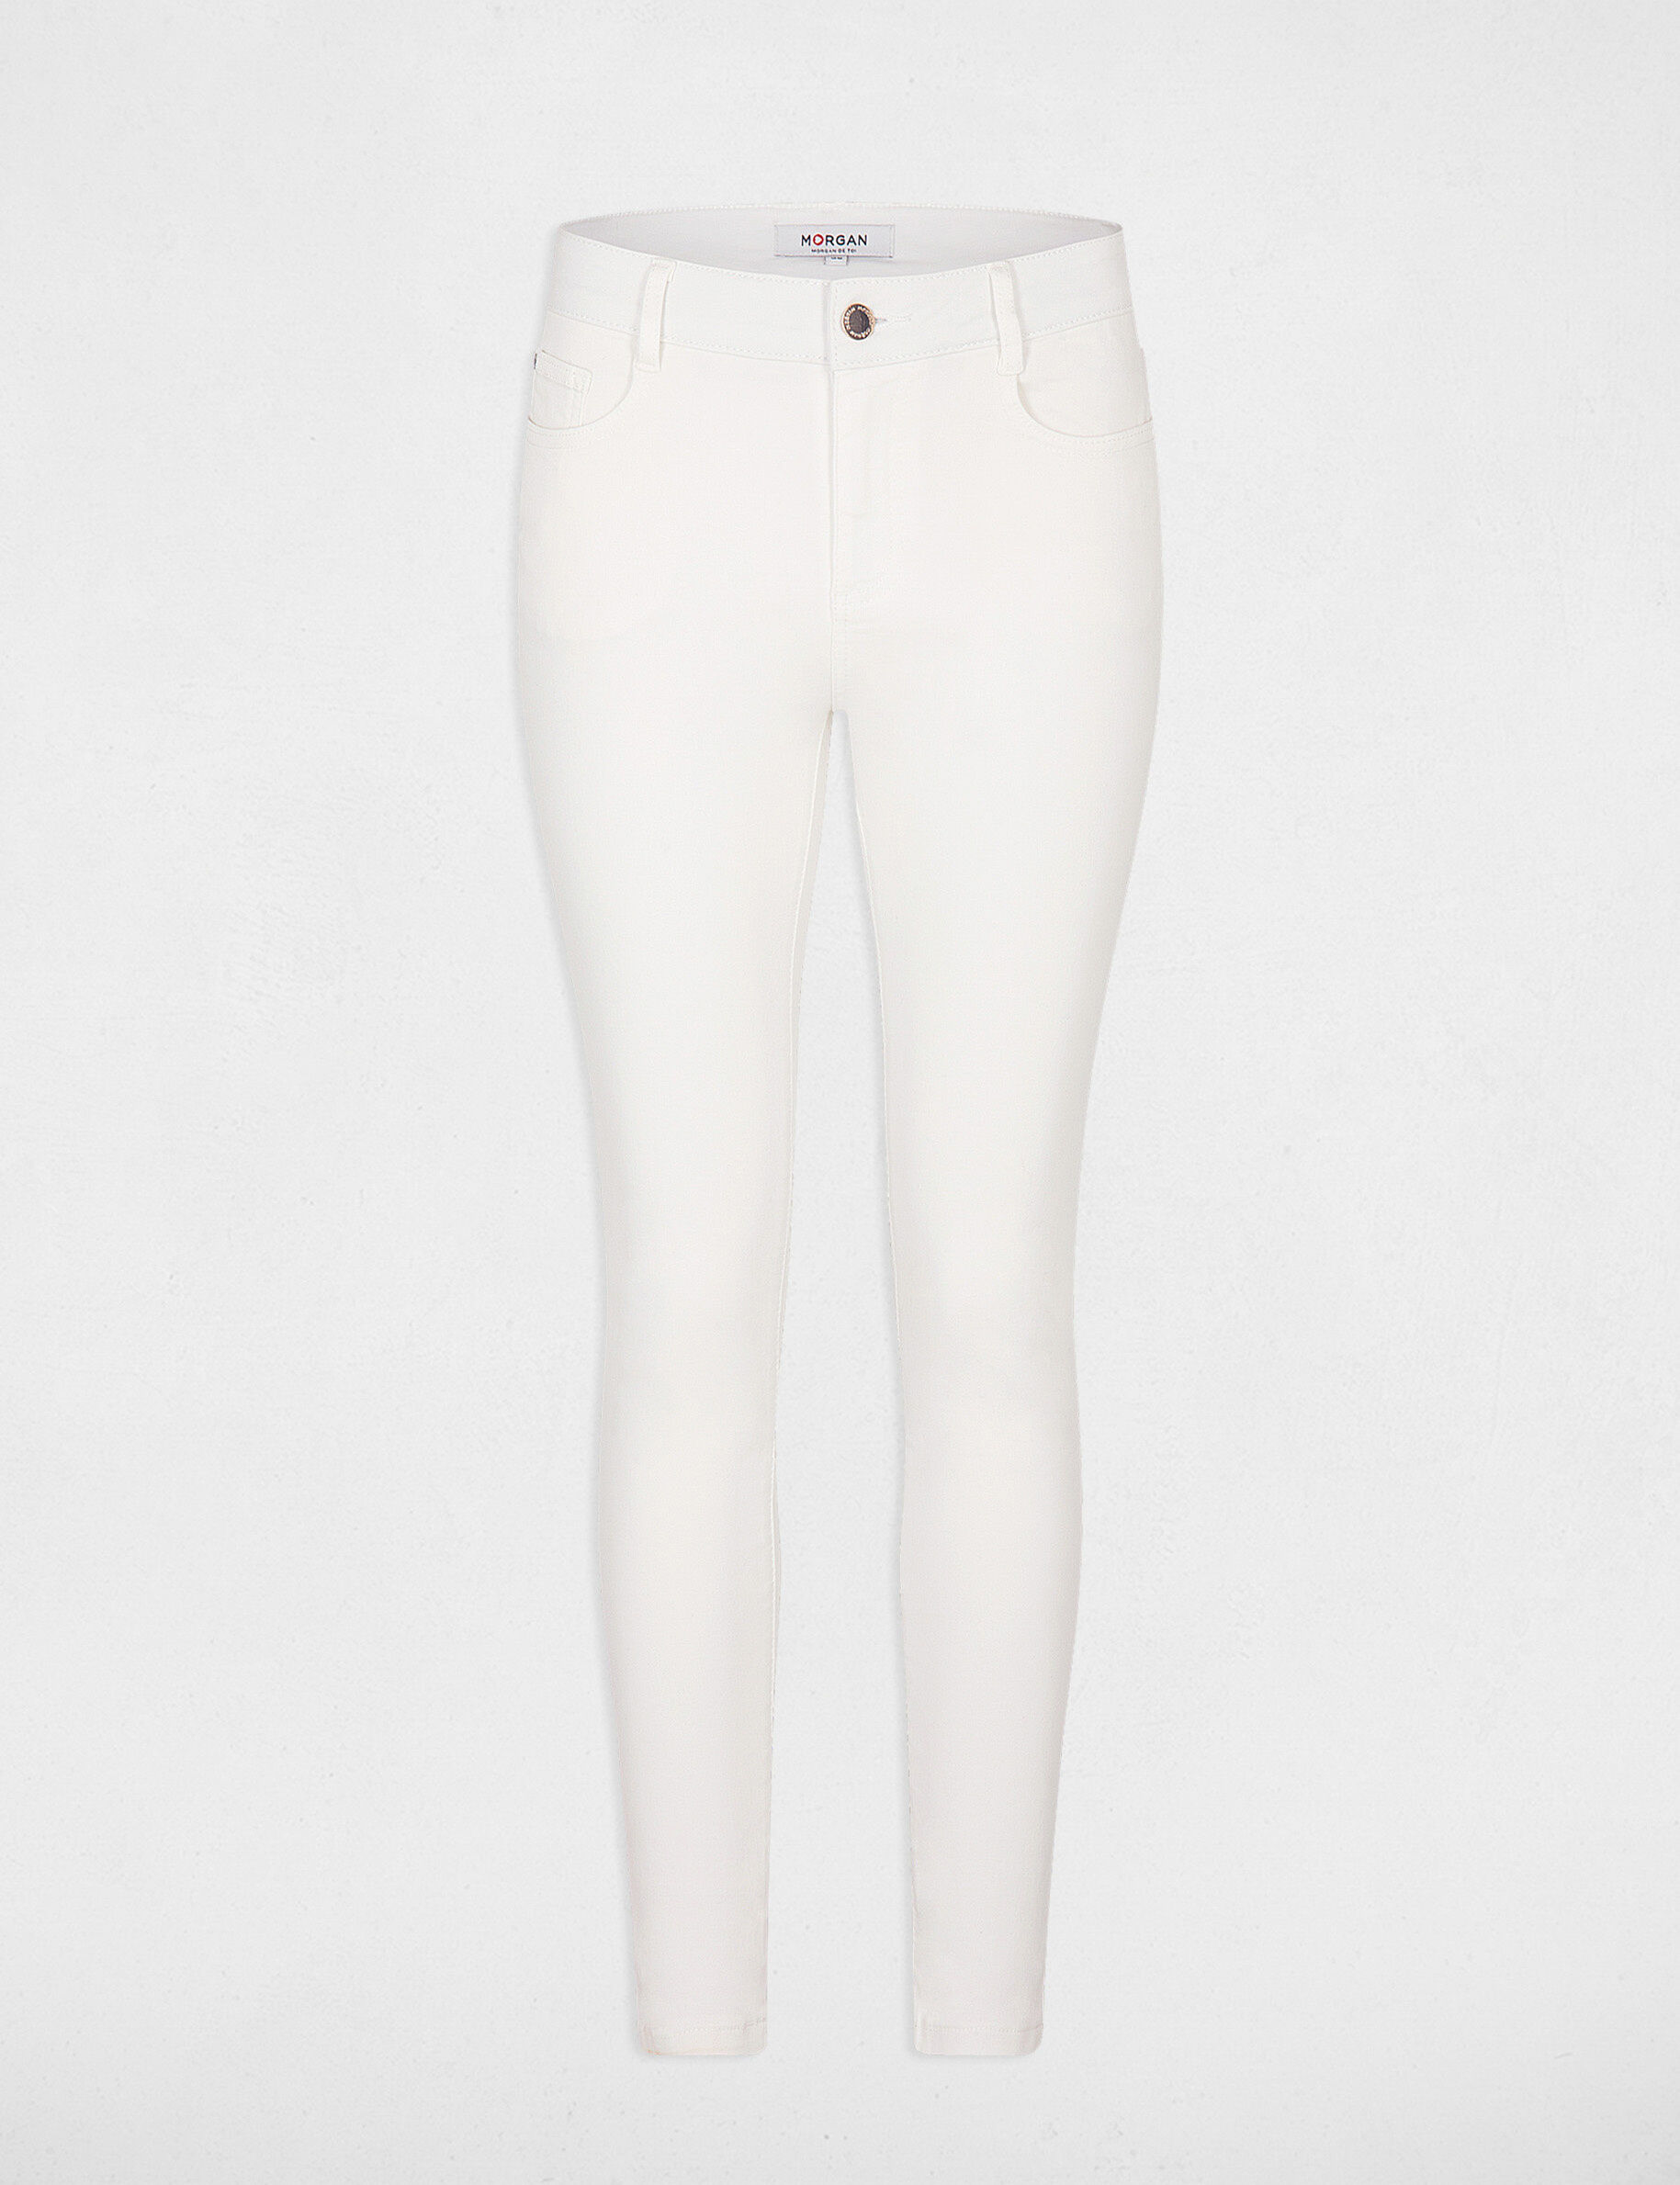 Classic Mens White Denim Skinny Jeans Slim Pockets Cargo Pants Overalls  Trousers | eBay